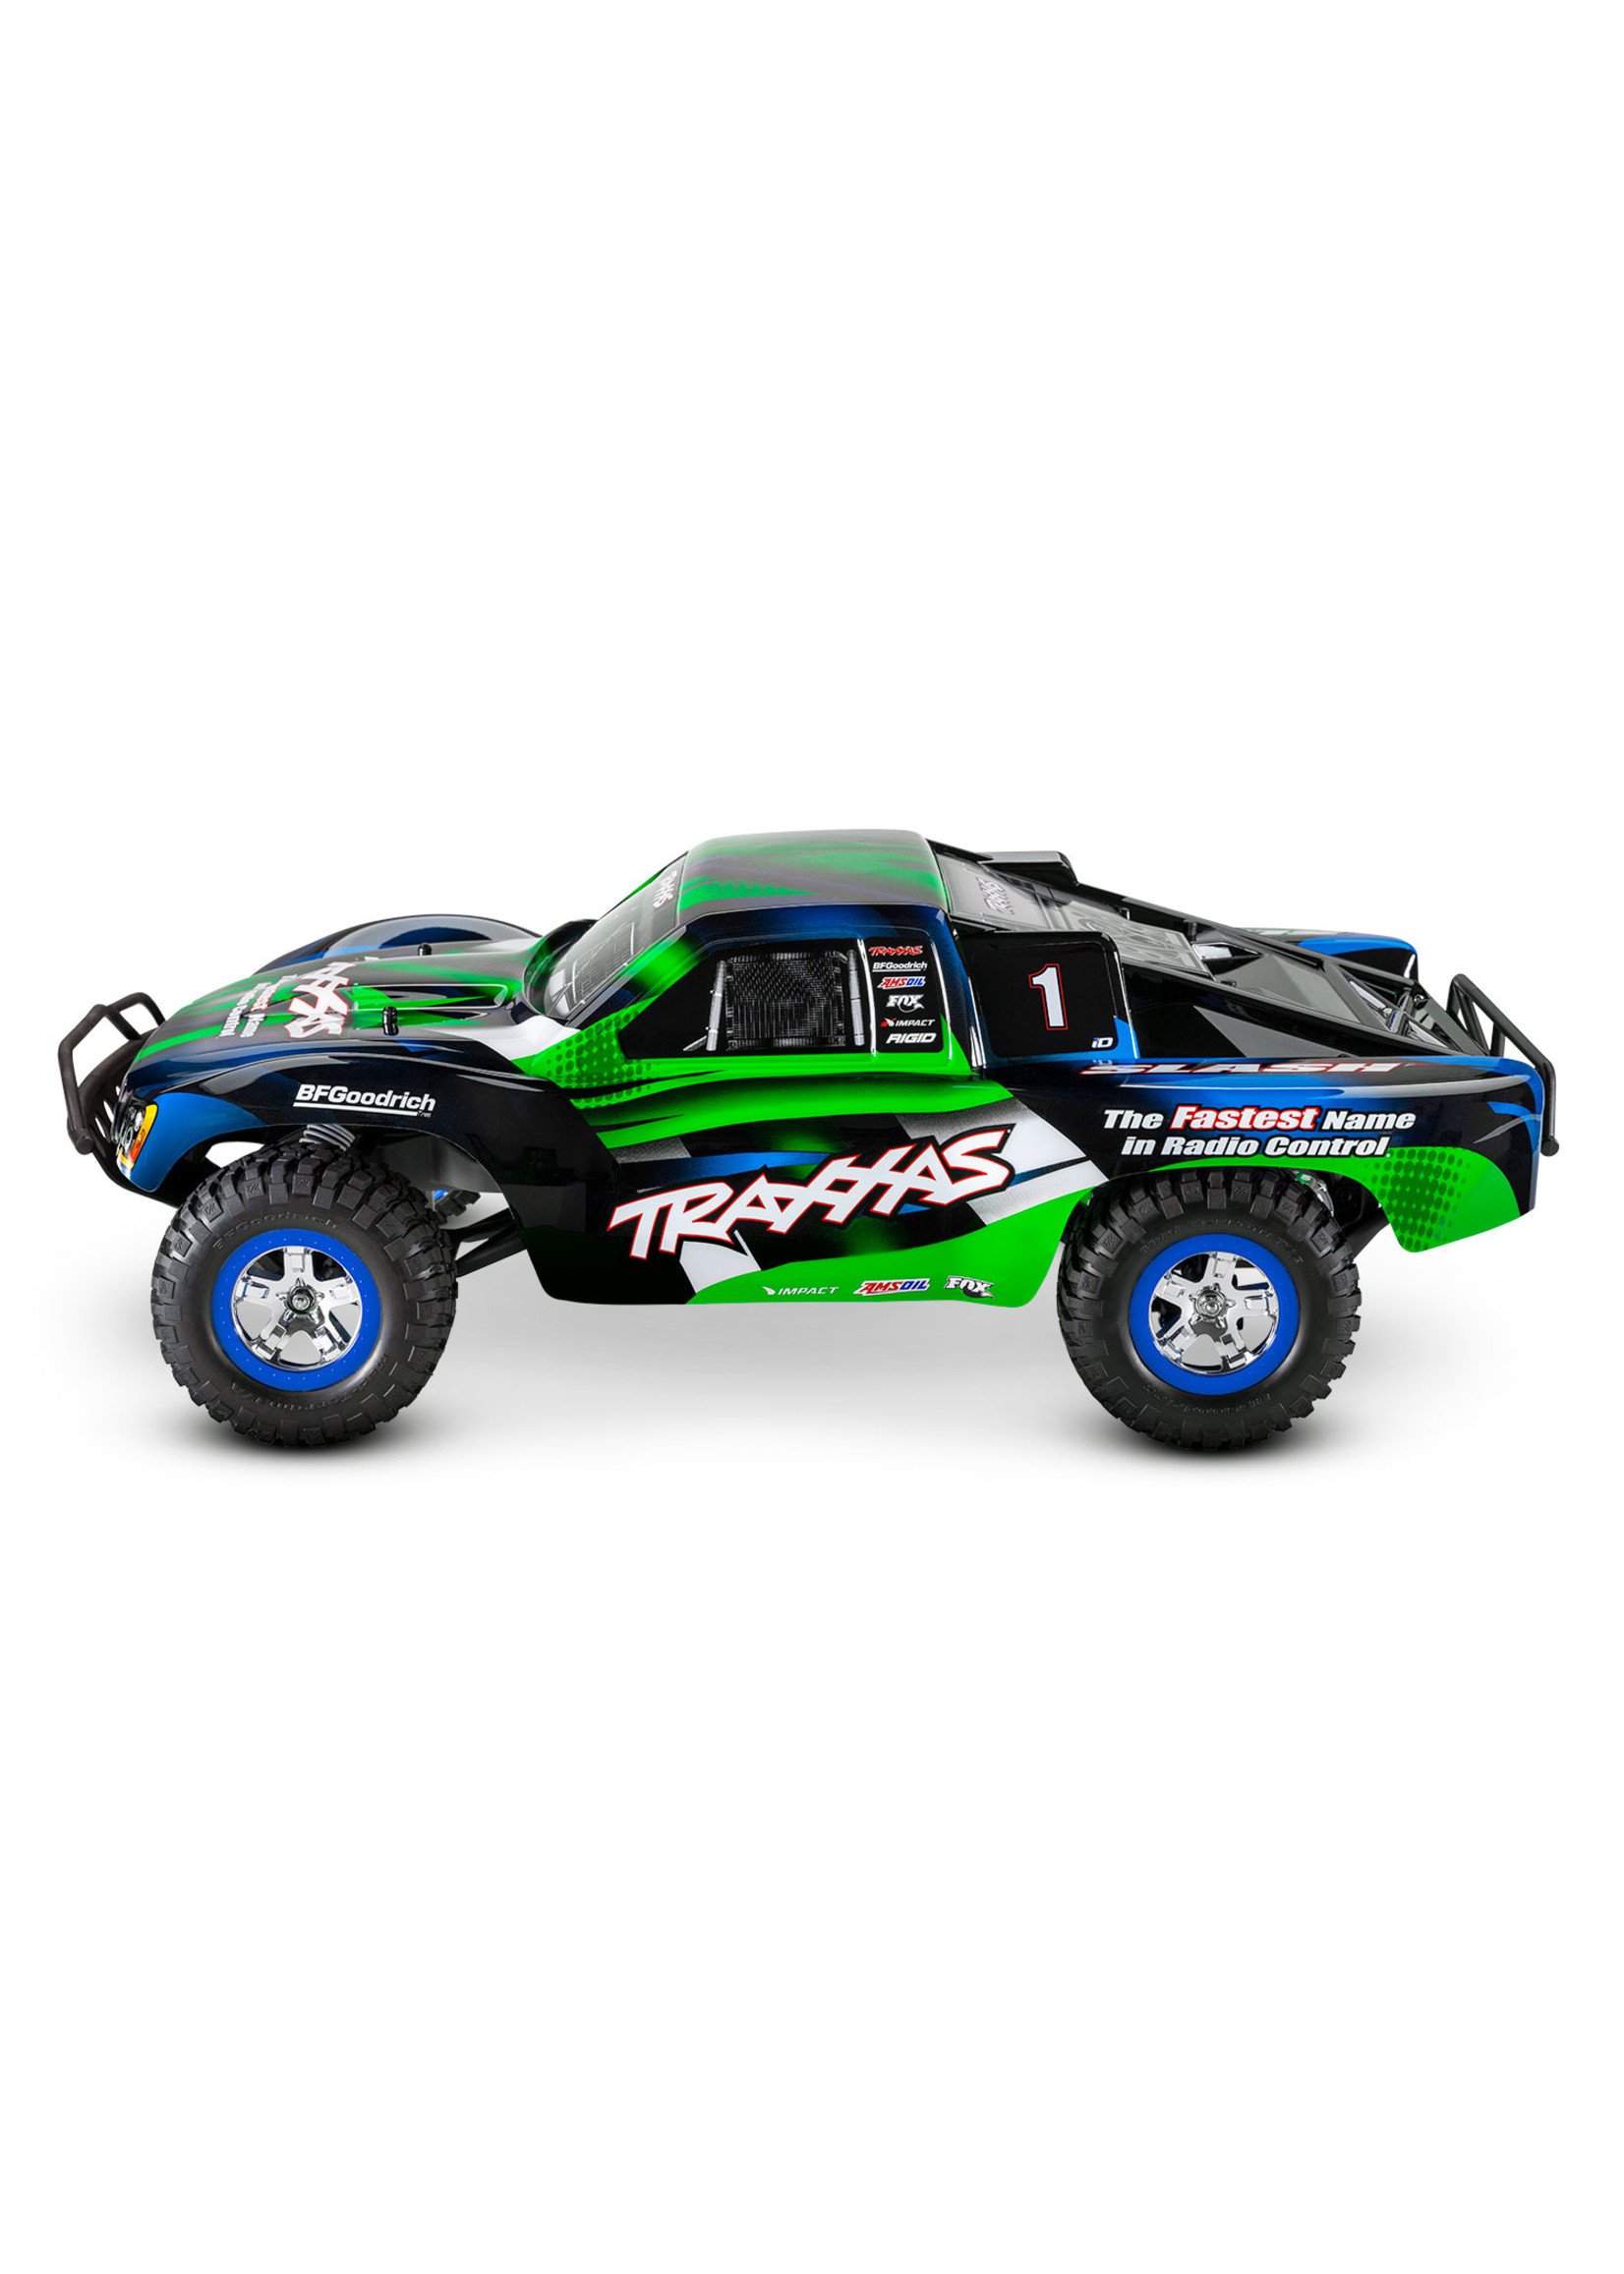 Traxxas 1/10 Slash 2WD RTR Short Course Truck - Green/Blue